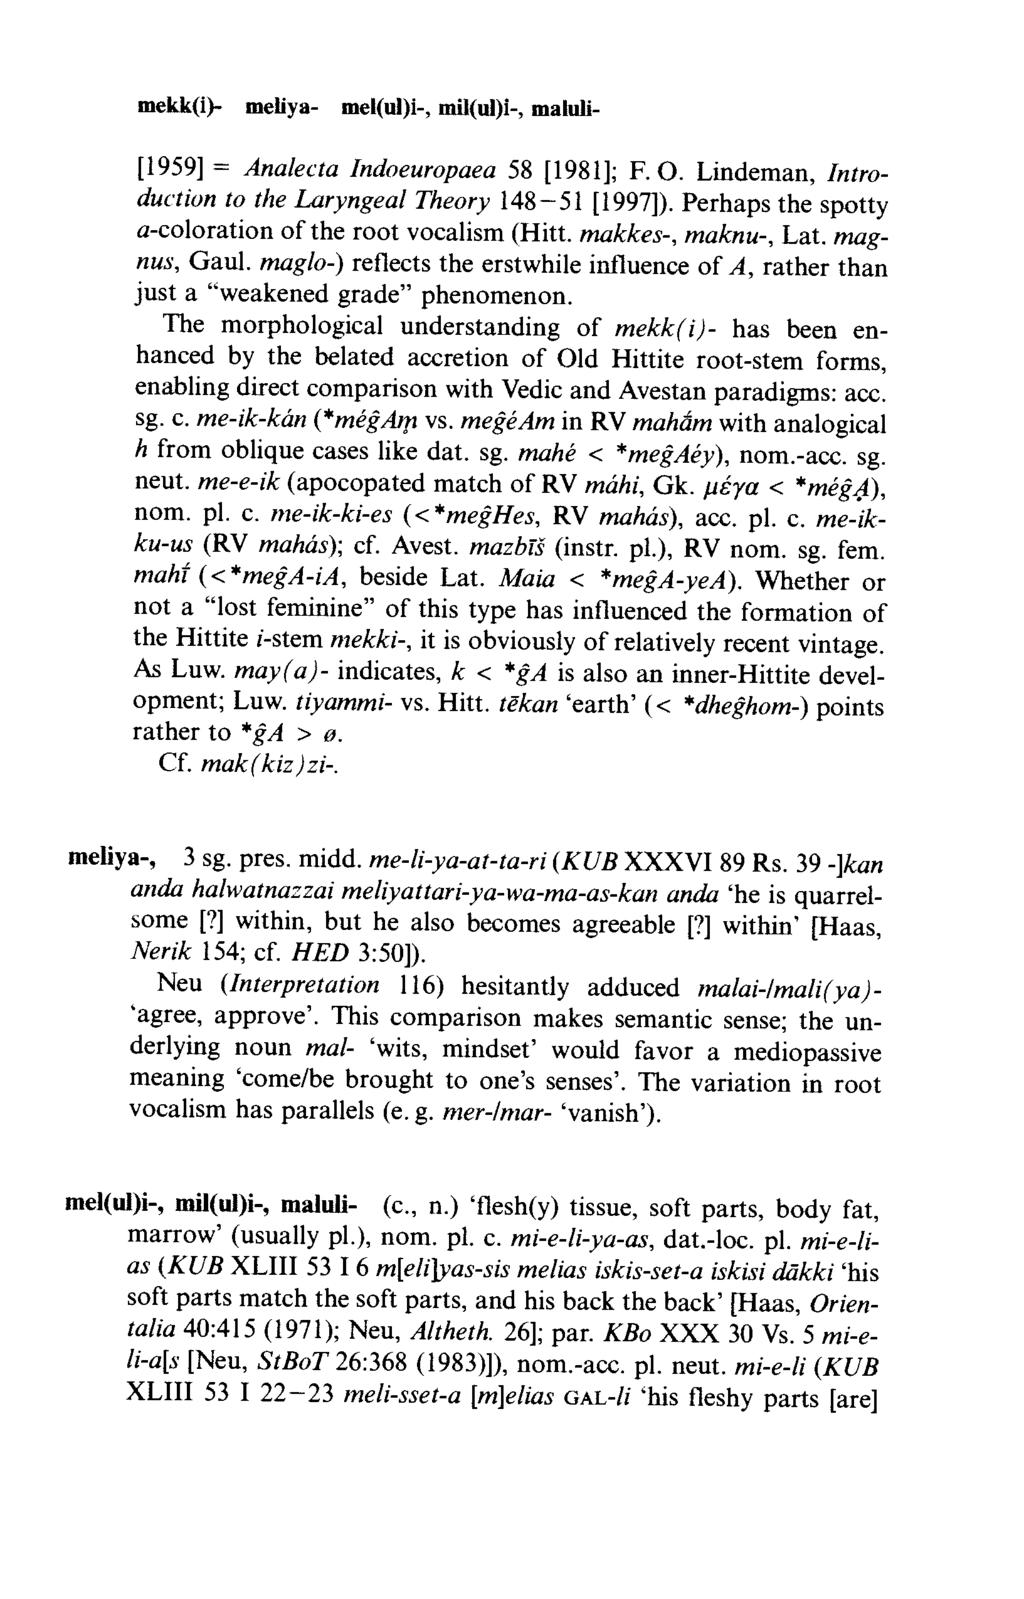 mekk(i)- meliya- mel(ul)i-, mil(ul)i-, maluli- [1959] = Analecta Indoeuropaea 58 [1981]; F. O. Lindeman, Introduction to the Laryngeal Theory 148-51 [1997]).